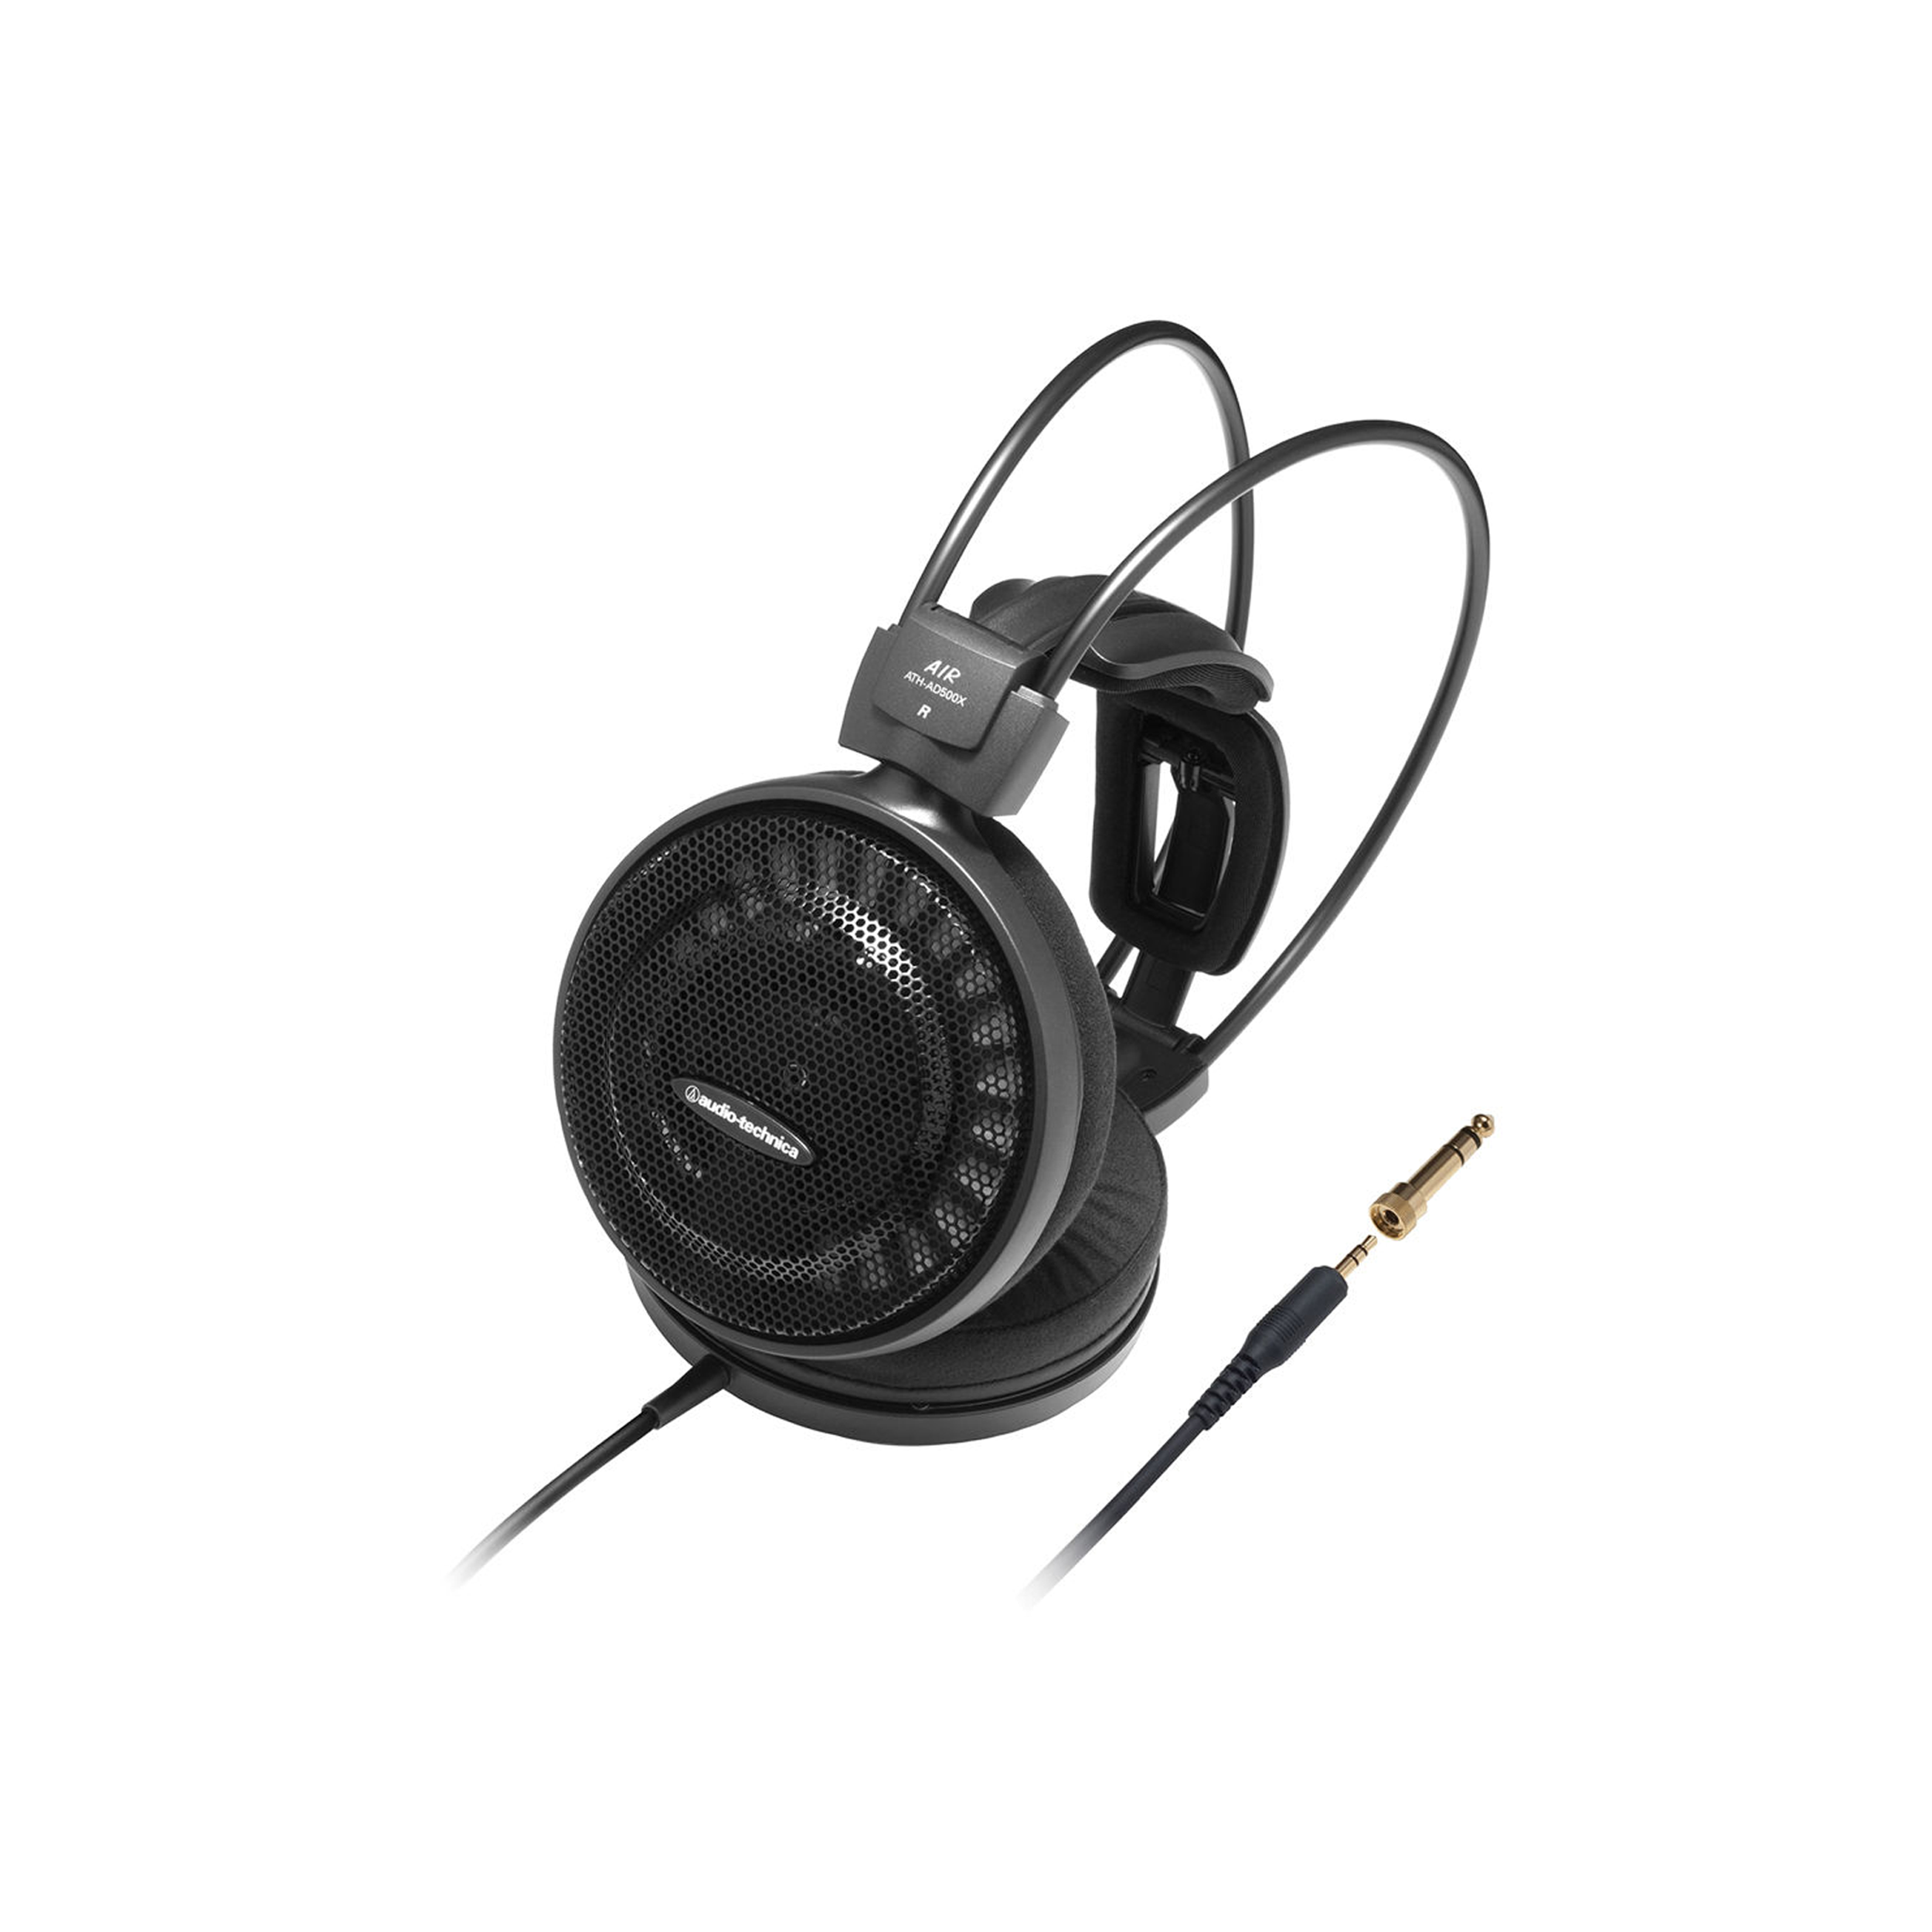 Audio-Technica Consumer ATH-AD500X casque en plein air audiophile